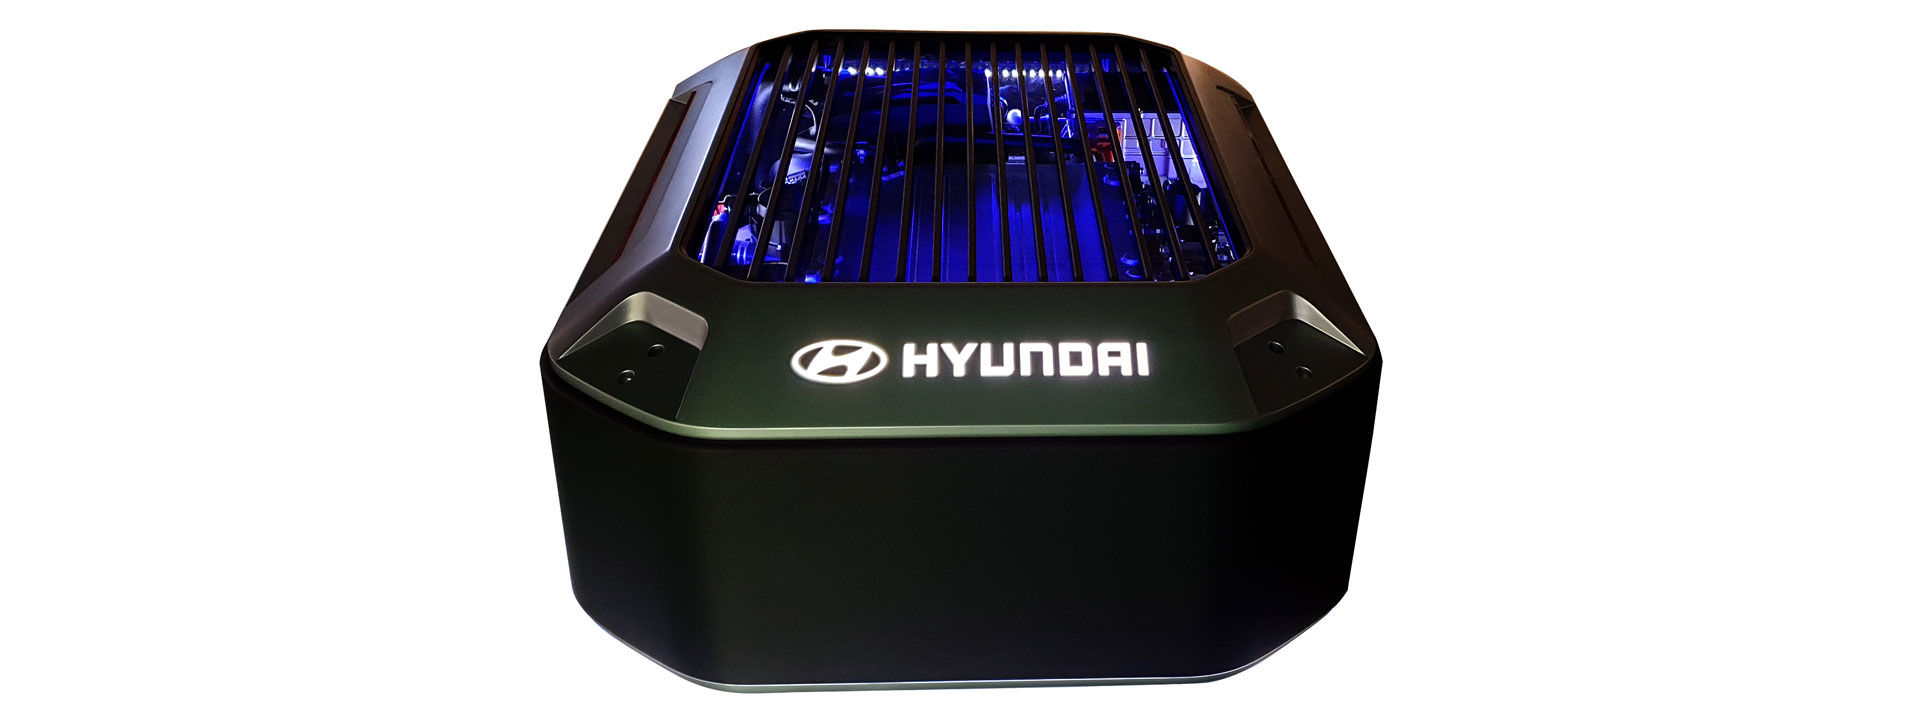 Hyundai_press-release_fuel-cell-system_desktop_1920x720.jpg